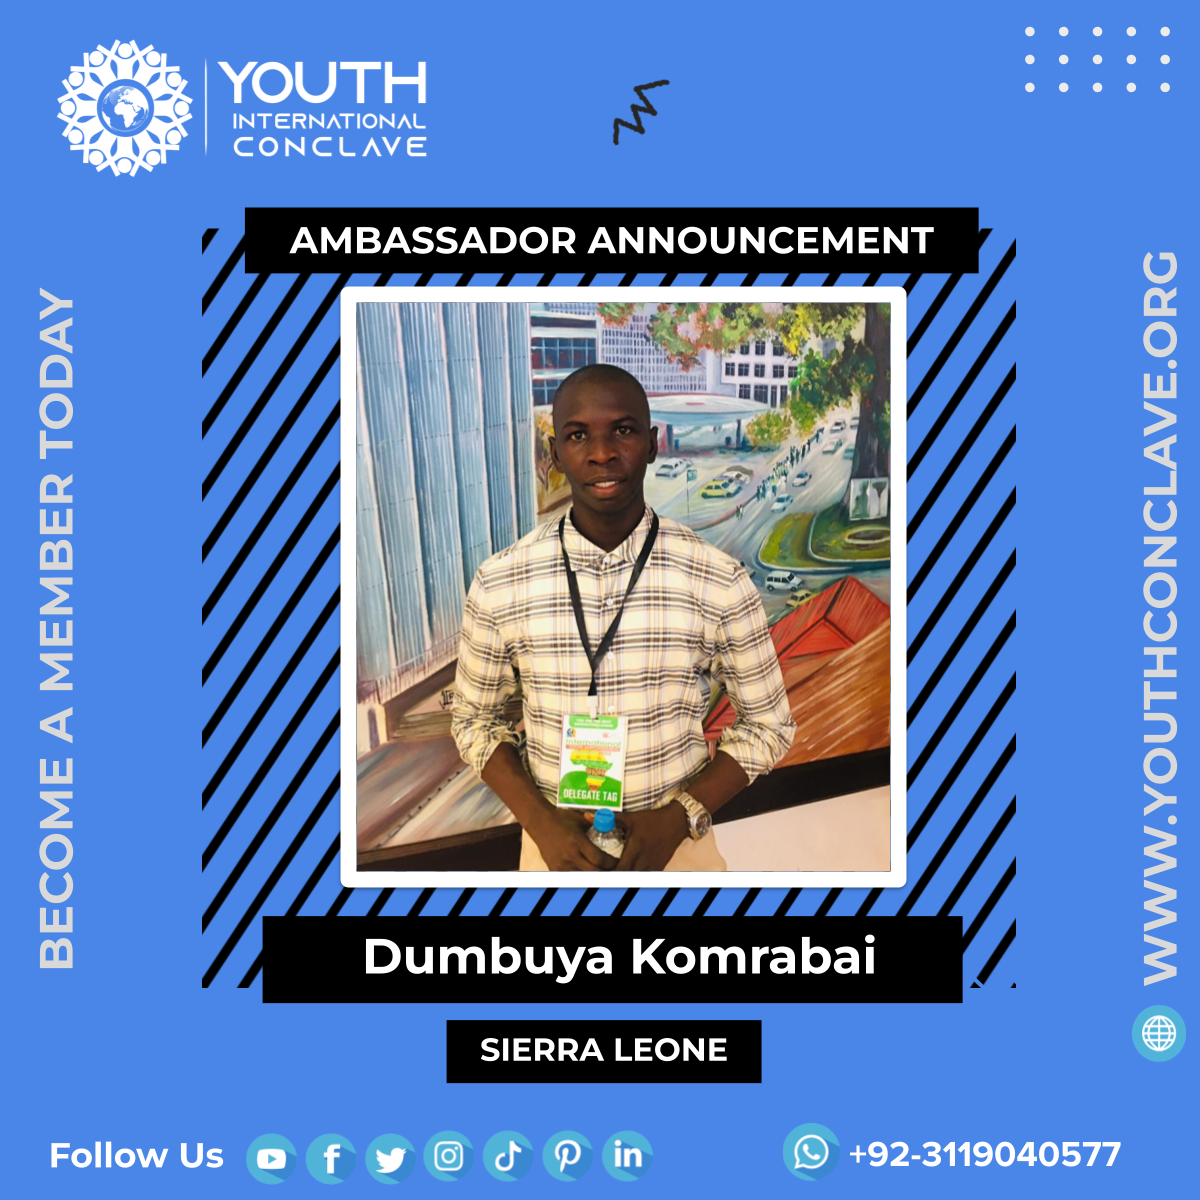 Dumbuya Komrabai from Sierra Leone as an Ambassador Youth International Conclave.